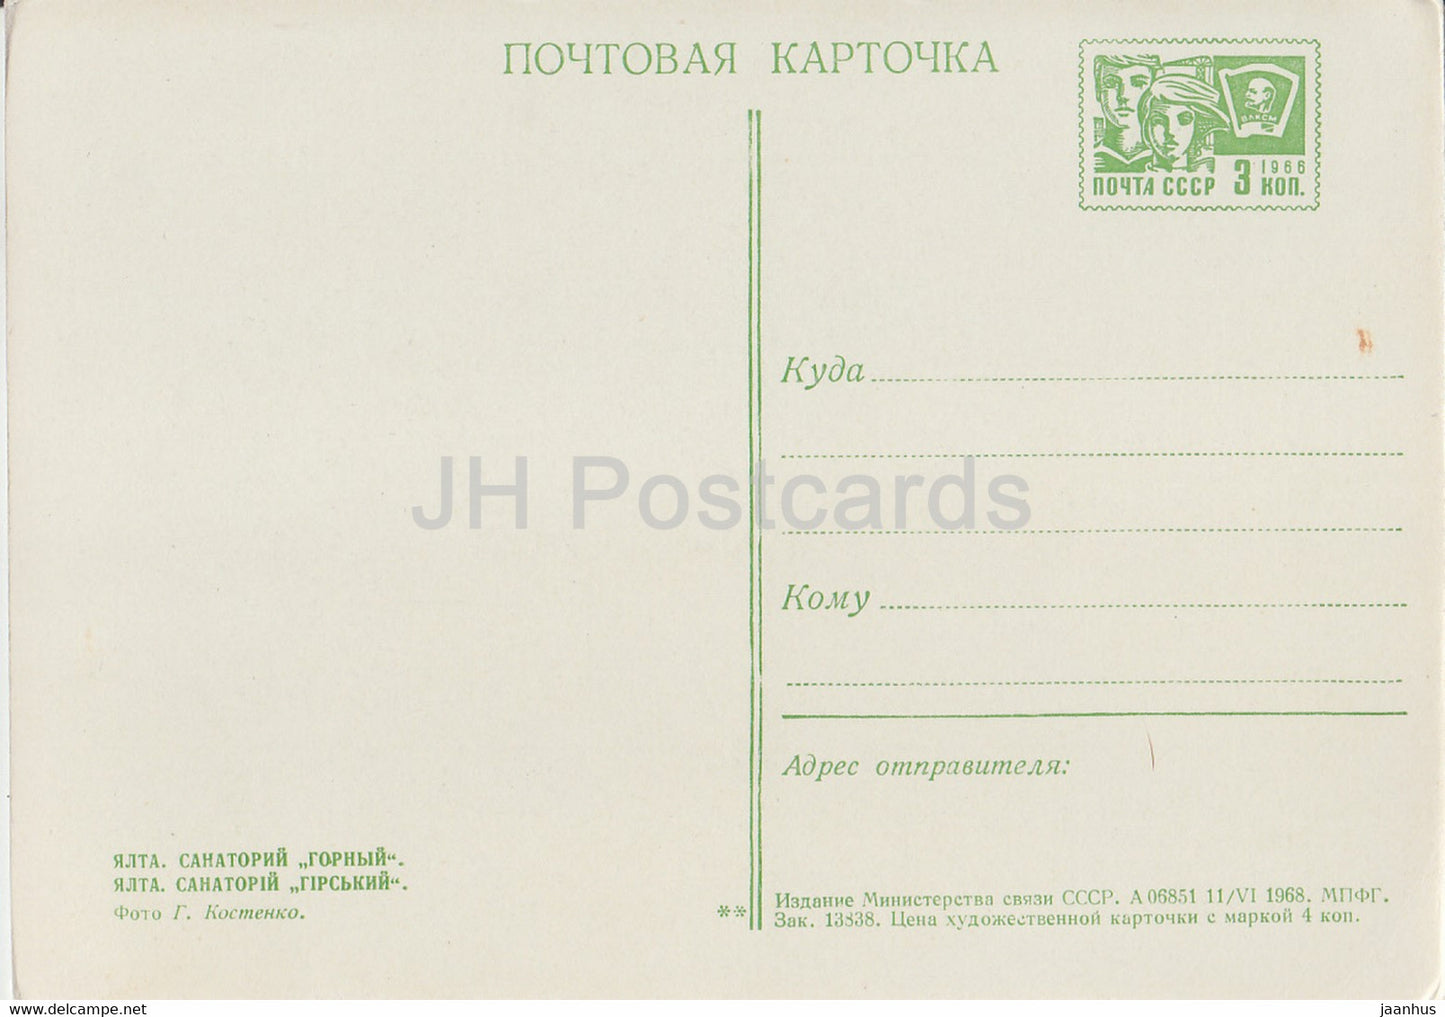 Yalta - sanatorium Gornyi - Crimée - entier postal - 1968 - Ukraine URSS - inutilisé